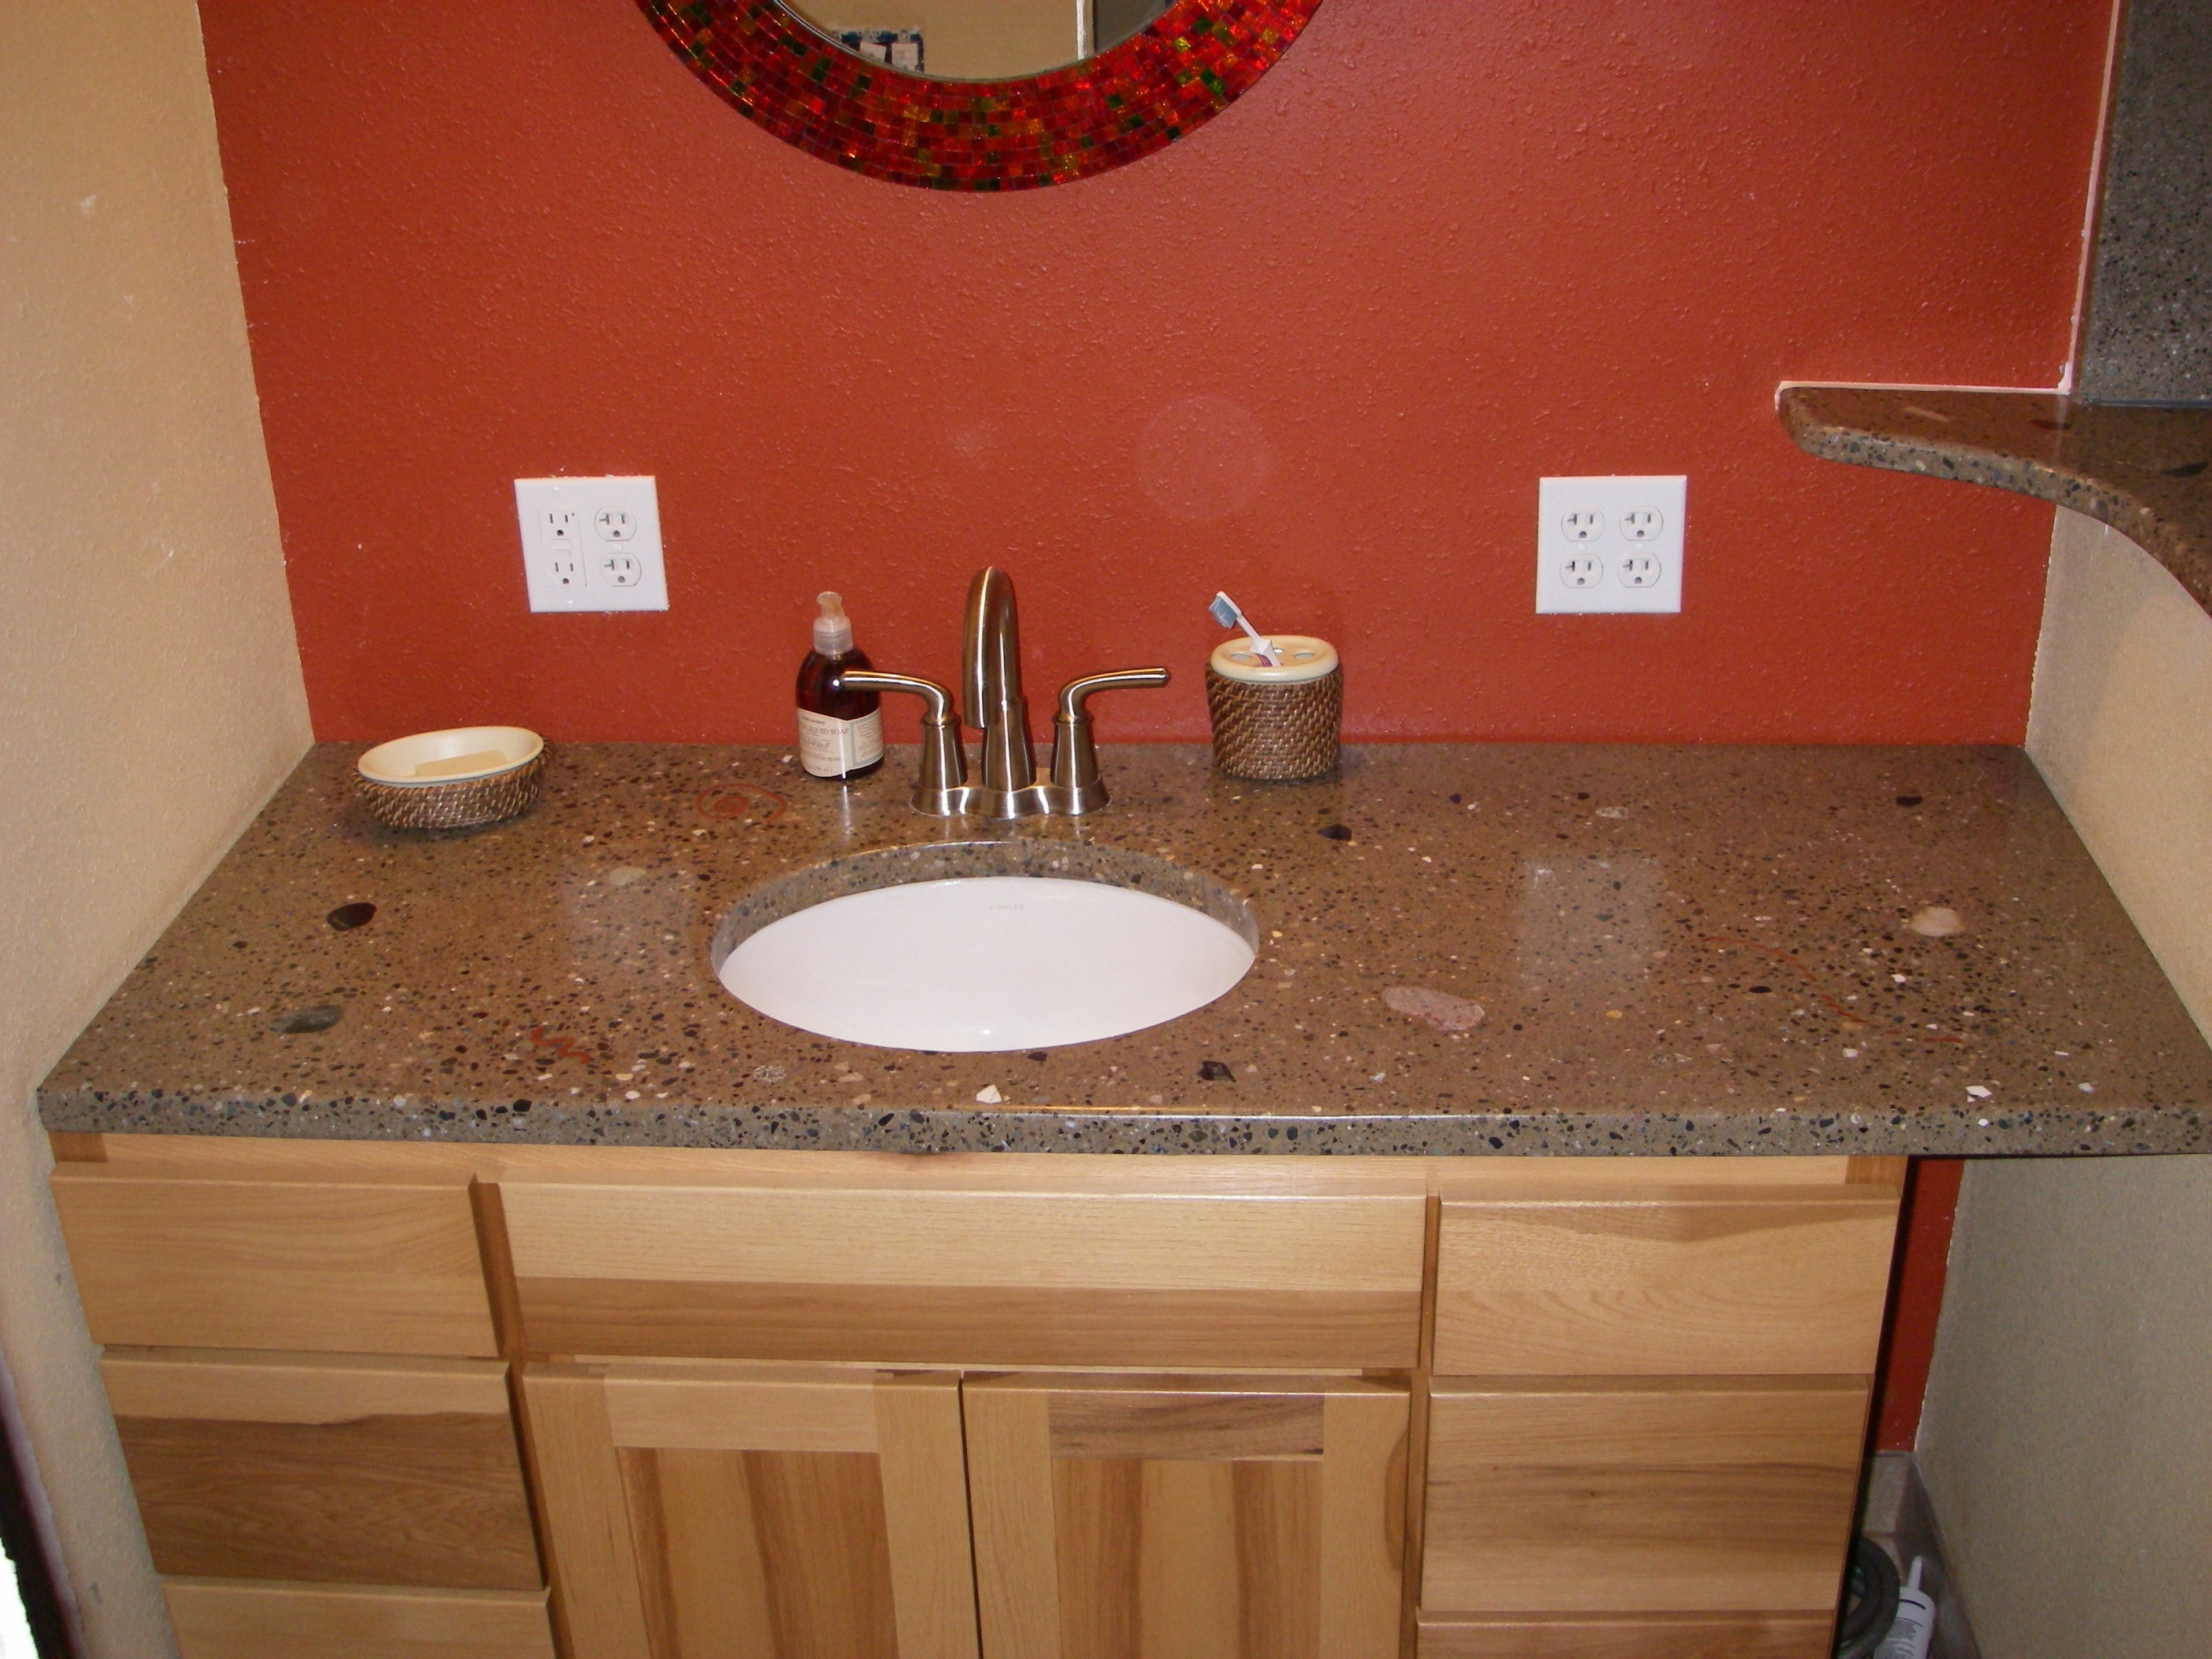 Residential bathroom countertop